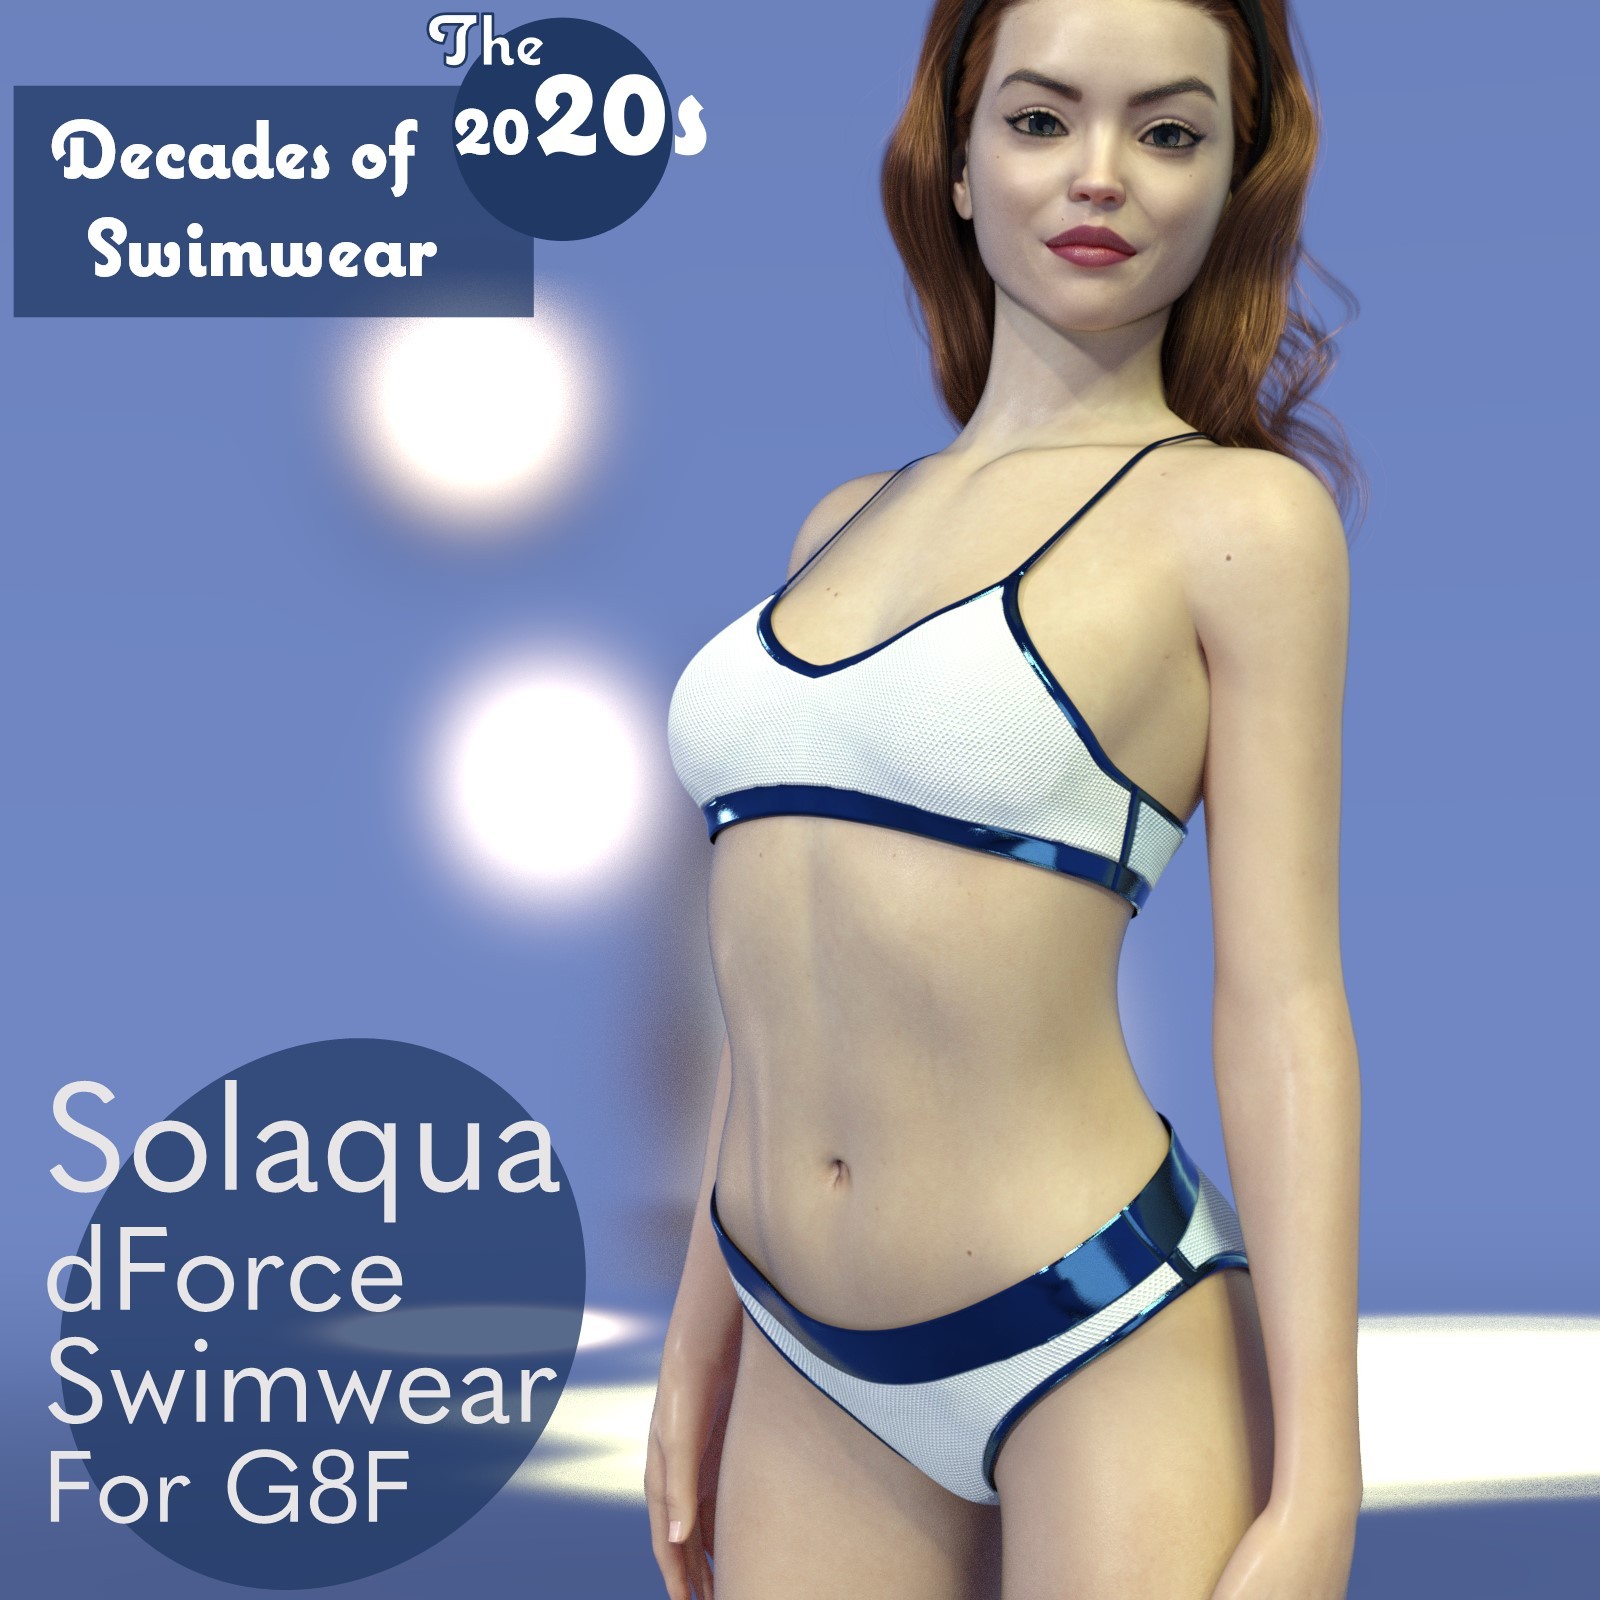 Solaqua dForce Swimwear for G8F - Decades of Swimwear, The 2020s by: Chris Cox, 3D Models by Daz 3D